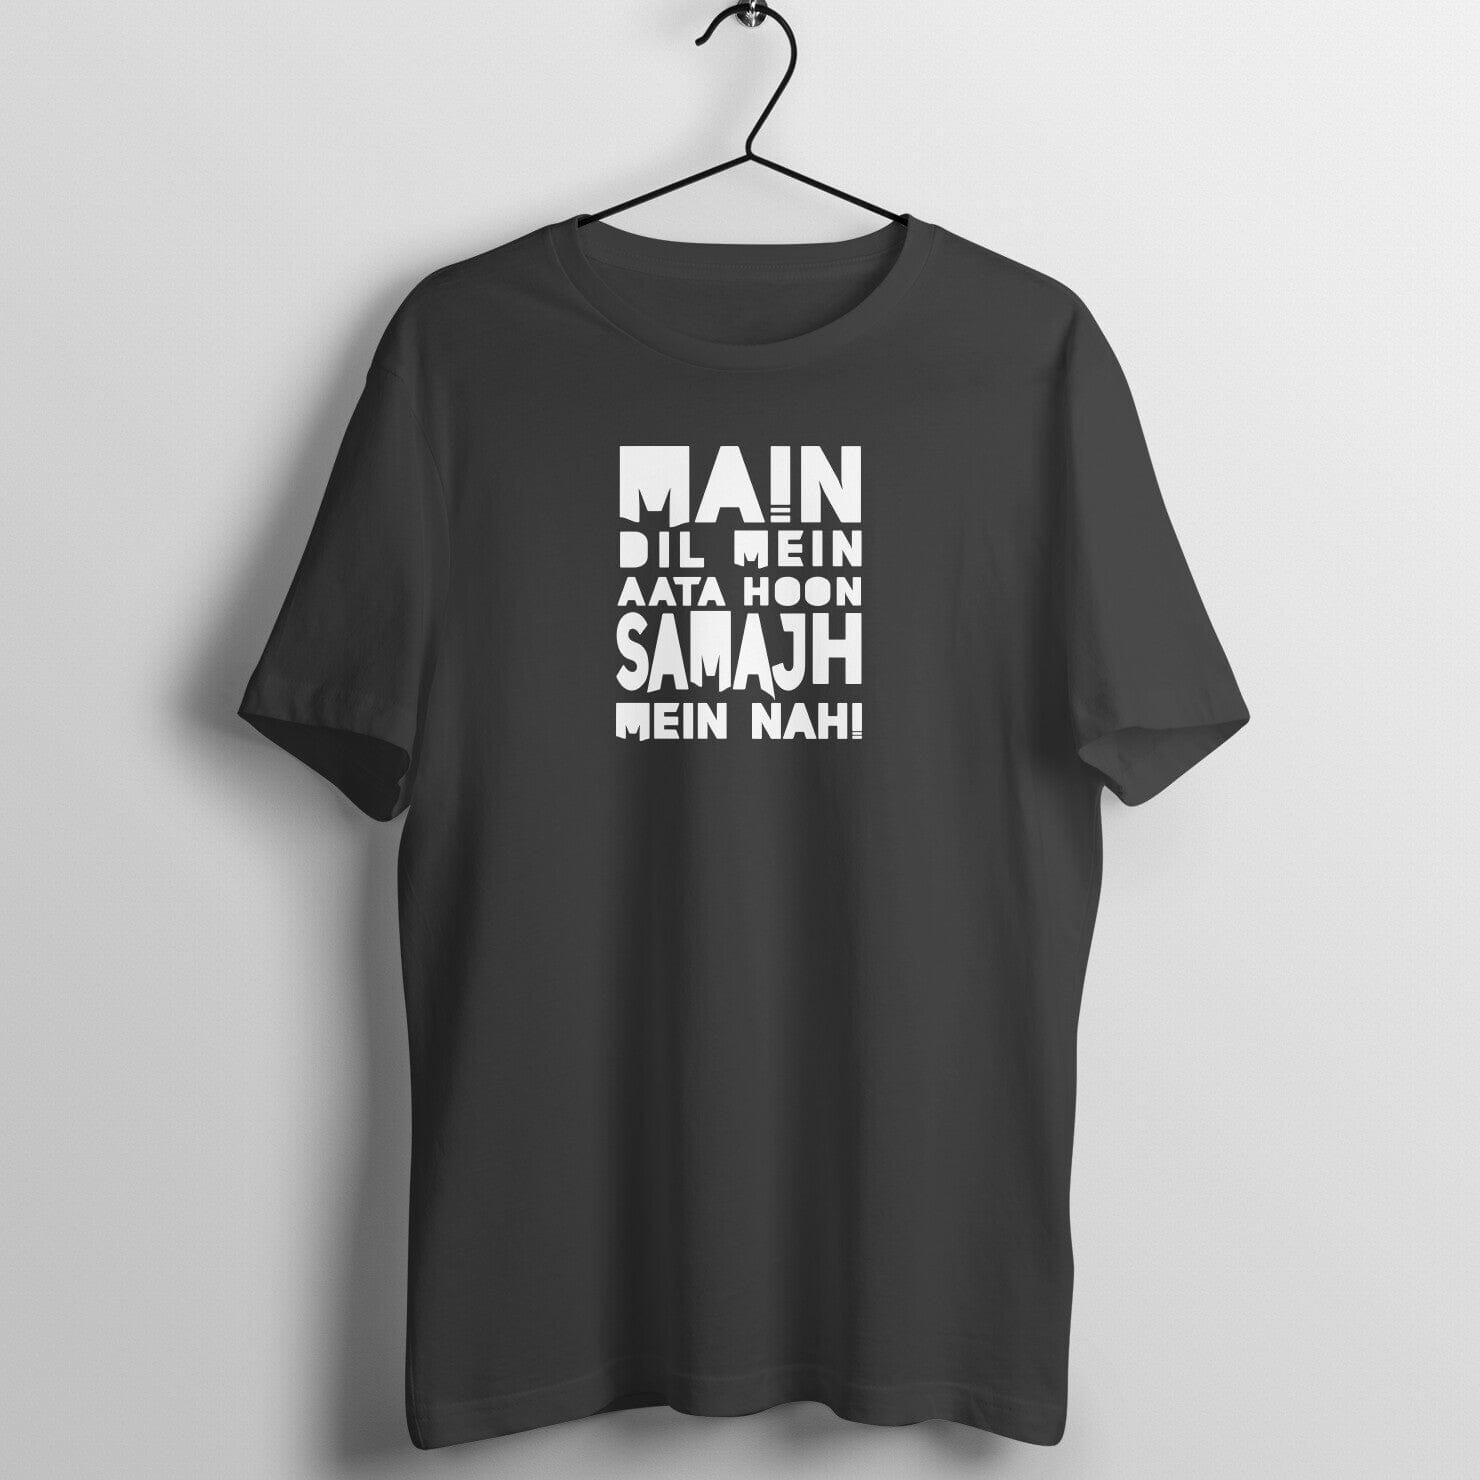 Main Dil Mein Aata Hoon Samajh Mein Nahi Exclusive Black T Shirt for Men and Women Printrove Black S 